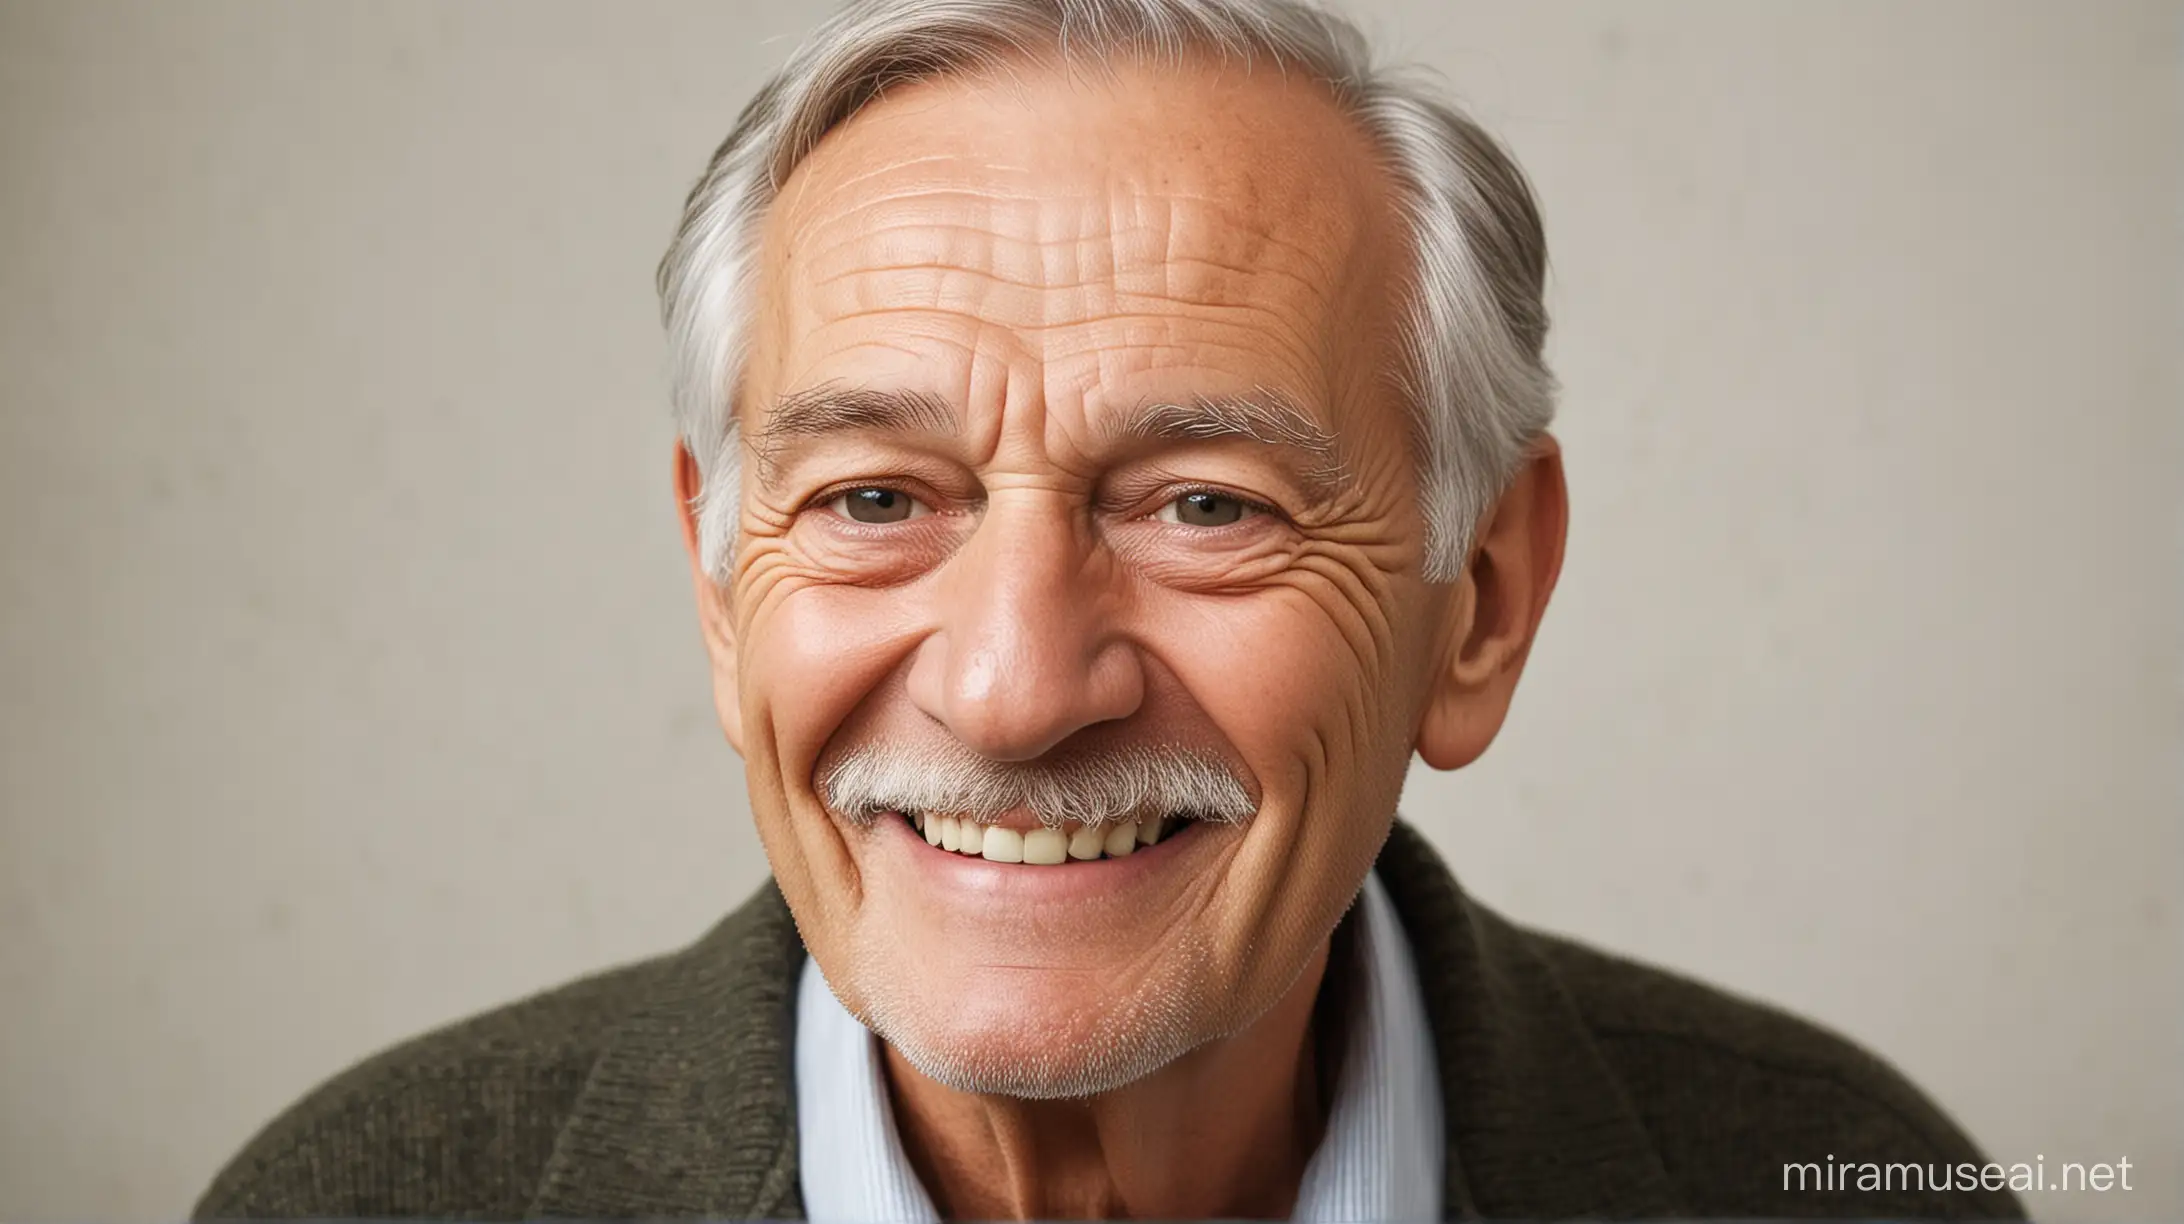 Joyful Elderly Man Smiling Happily